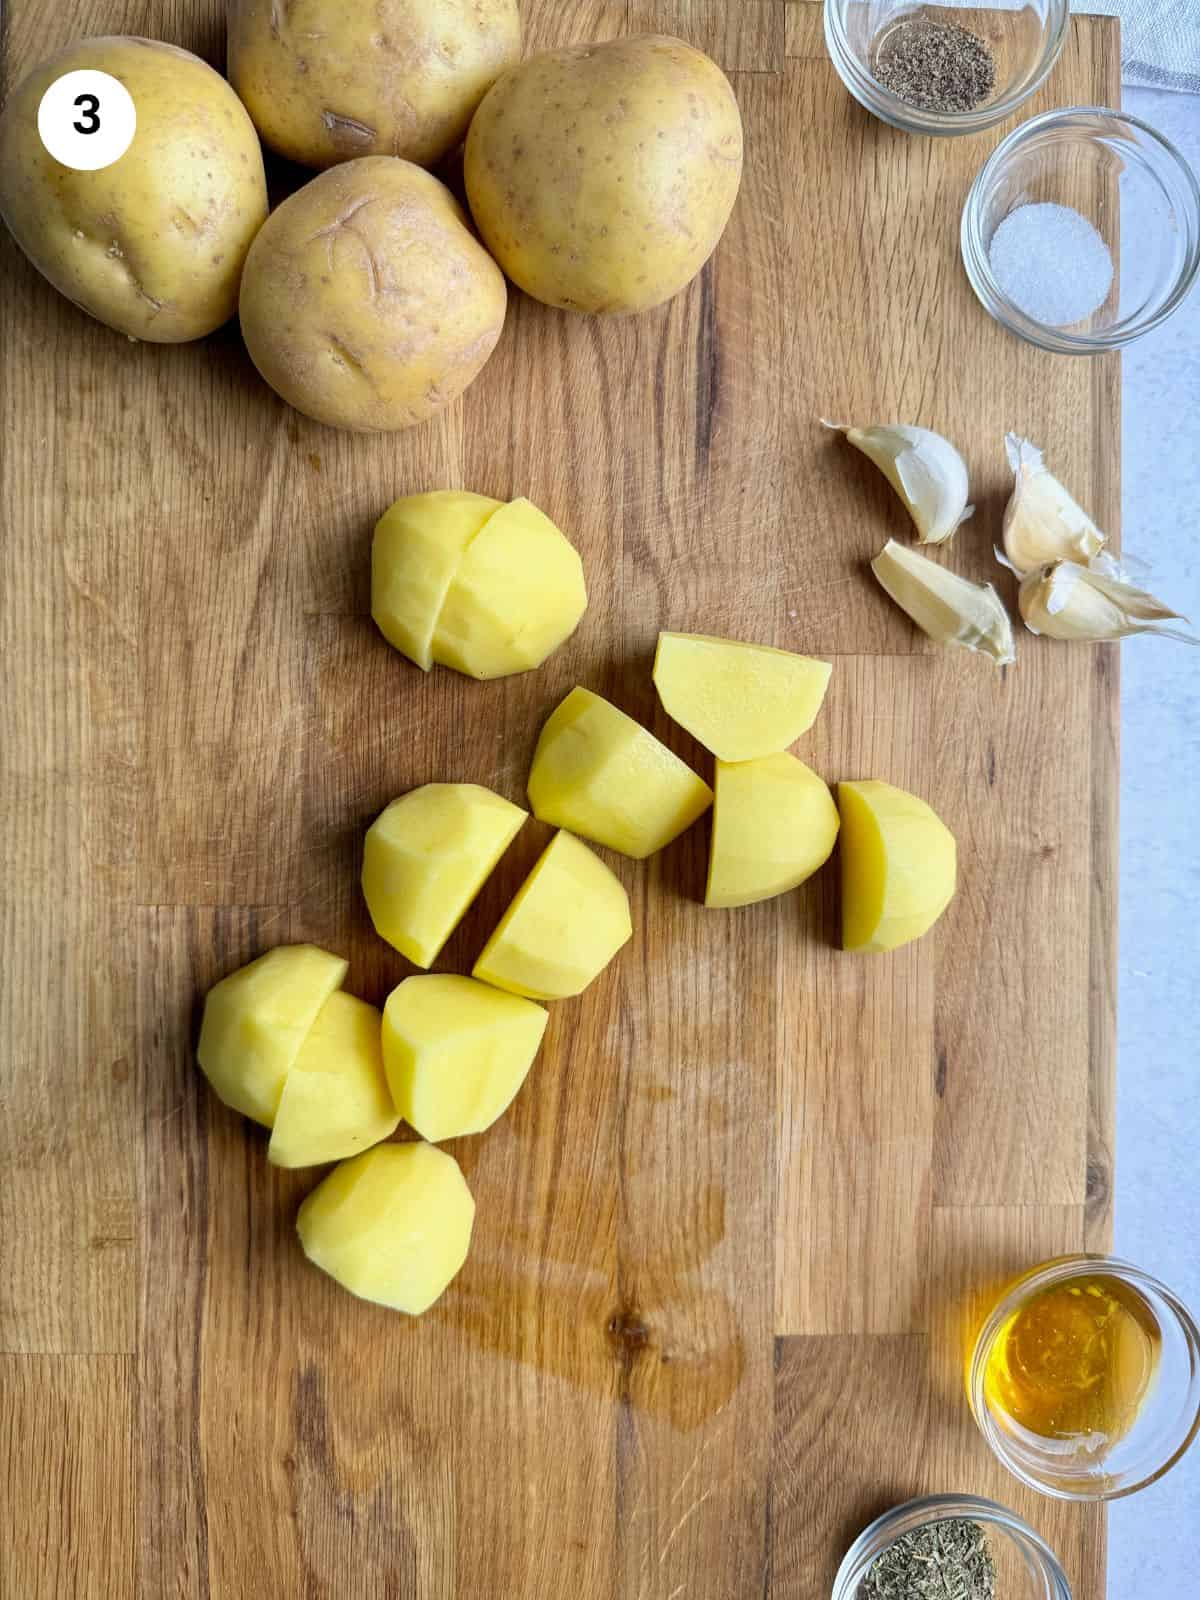 Cutting the potatoes in quarters.